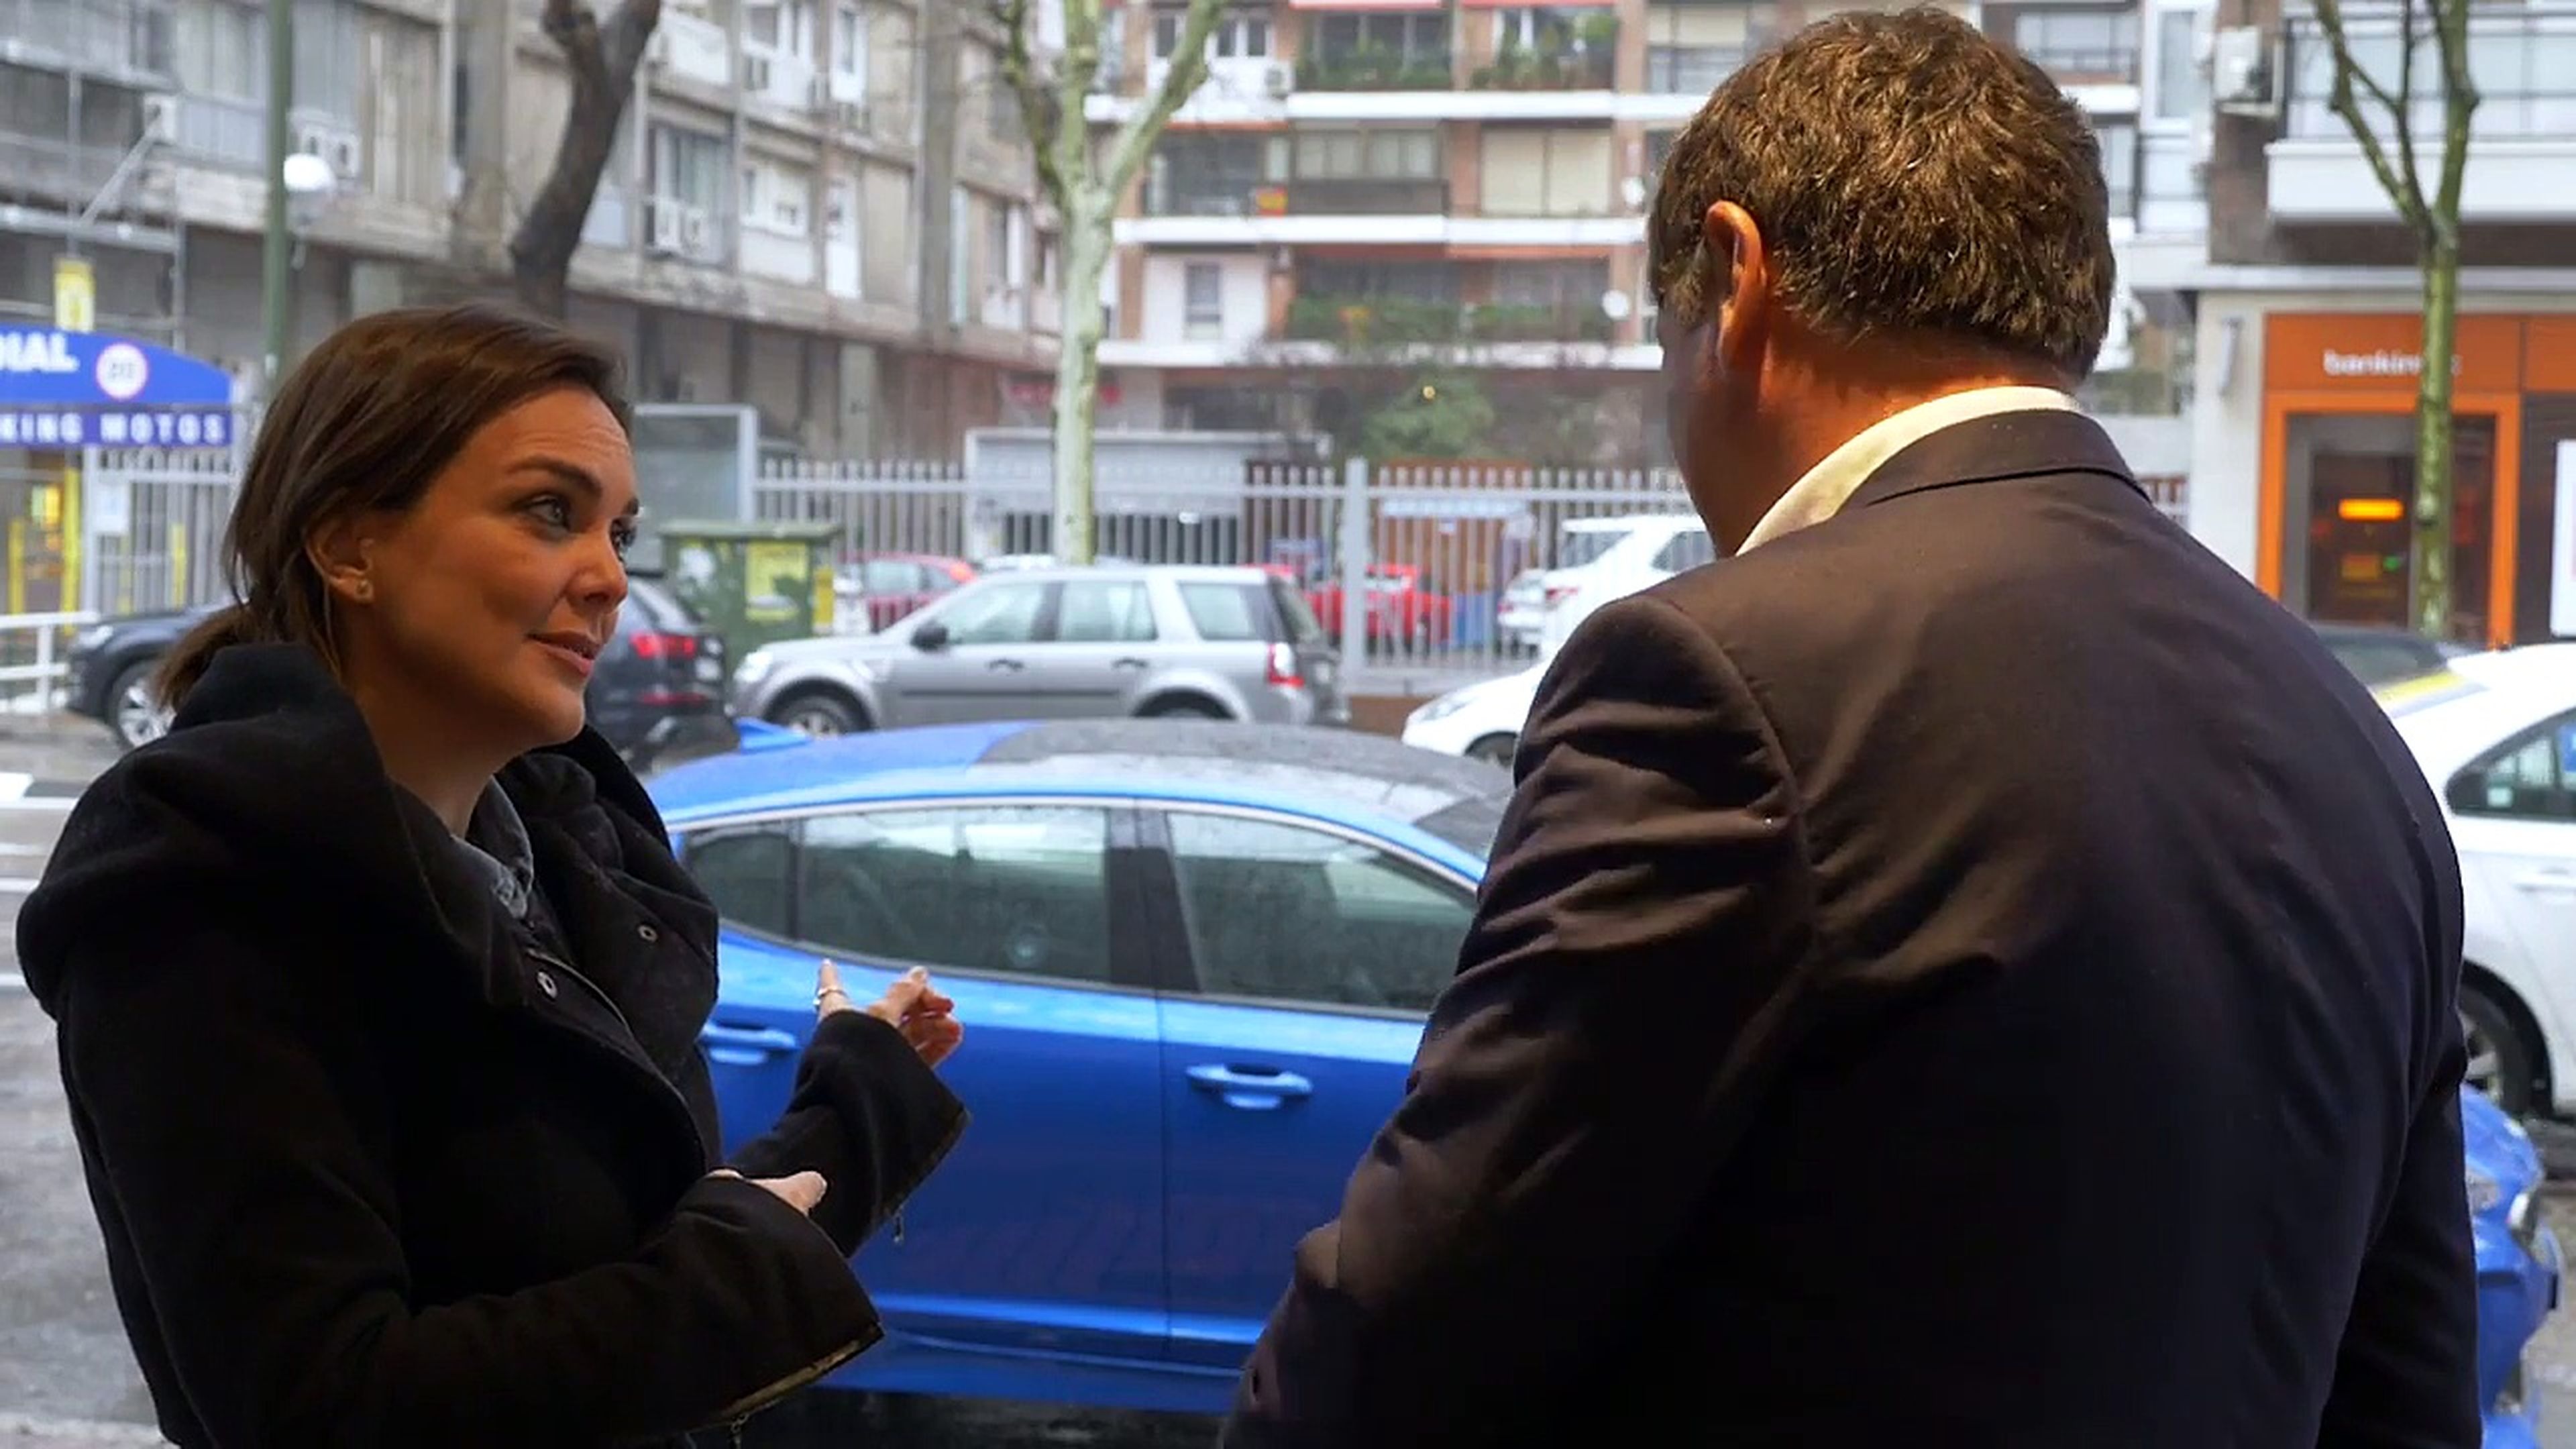 VÍDEO: entrevistan al tío de Rafa Nadal en un Kia Stinger, ¡crack!